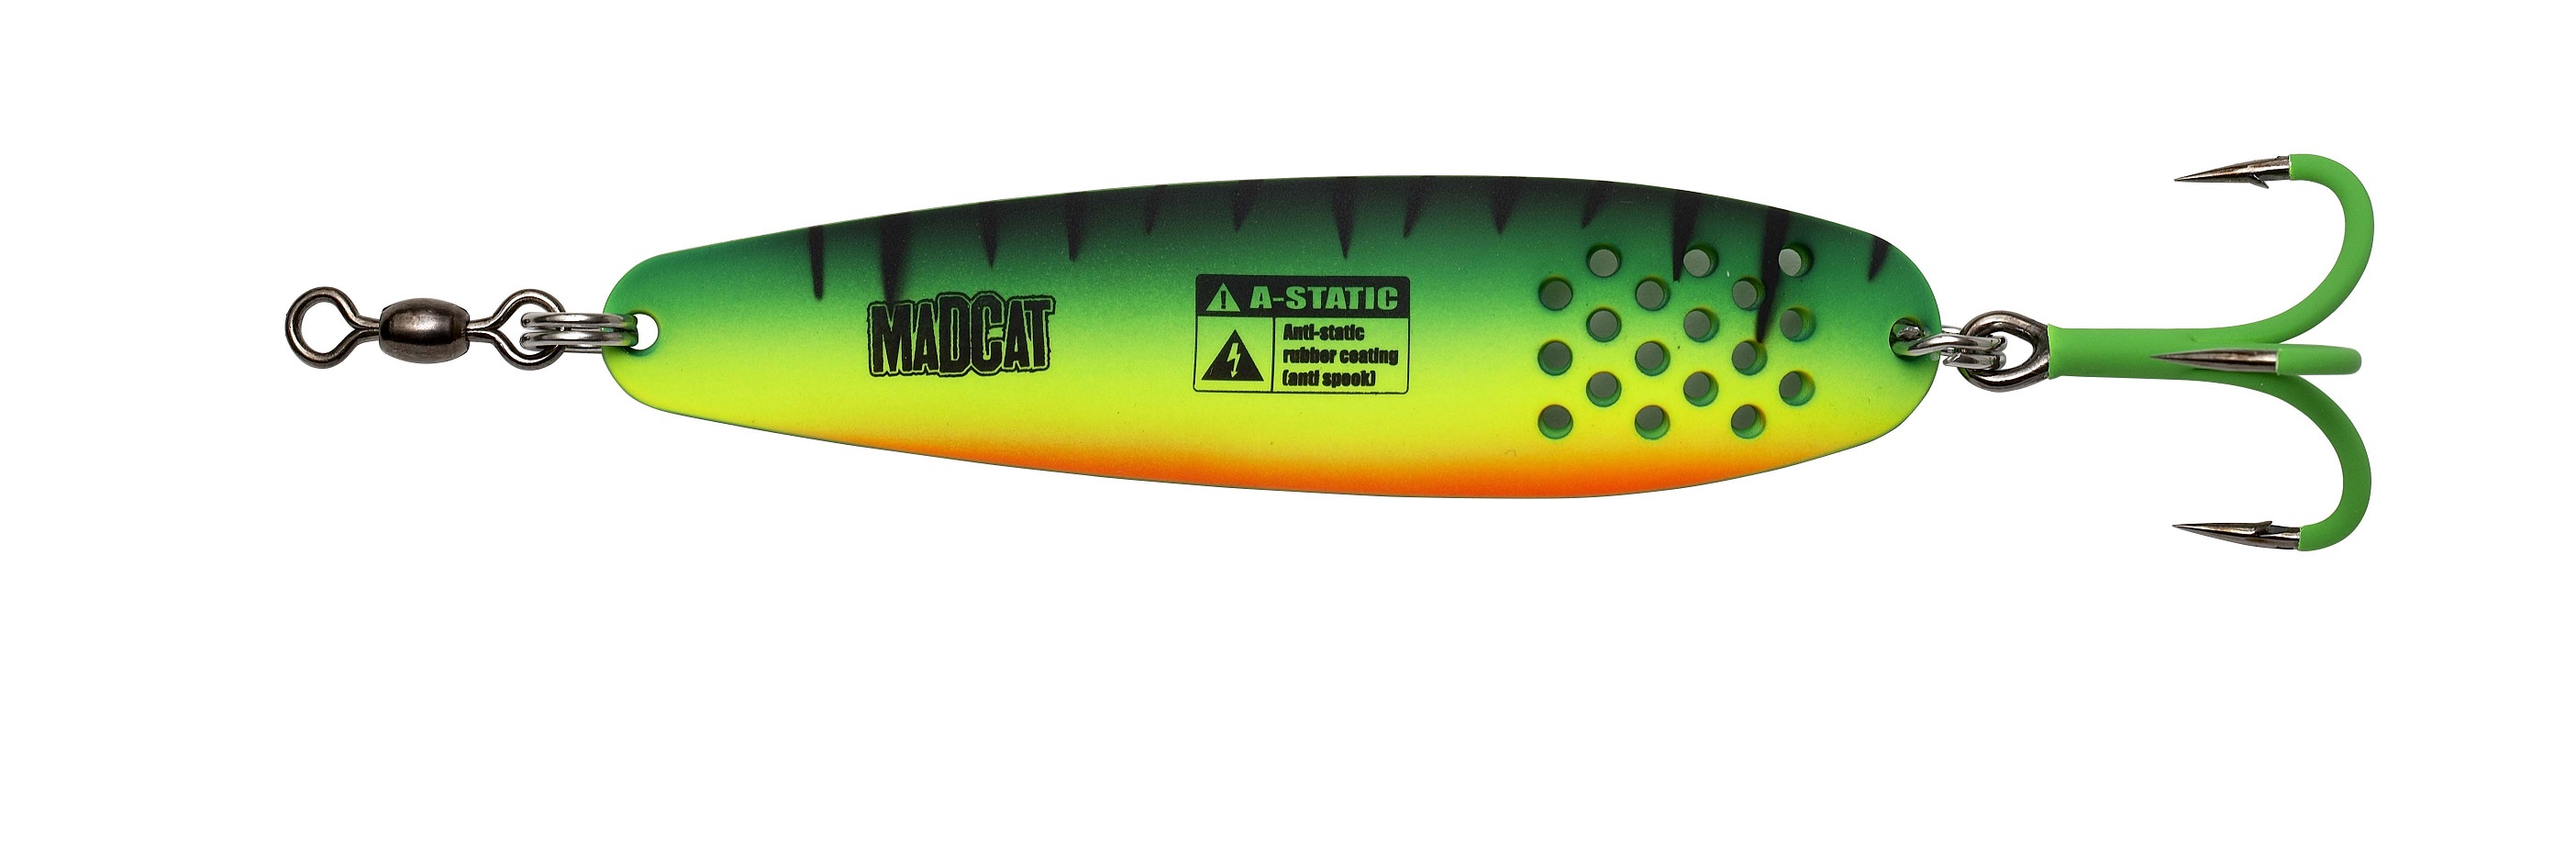 Madcat A-Static Turbine Siluro Spoon (90g) - Firetiger UV